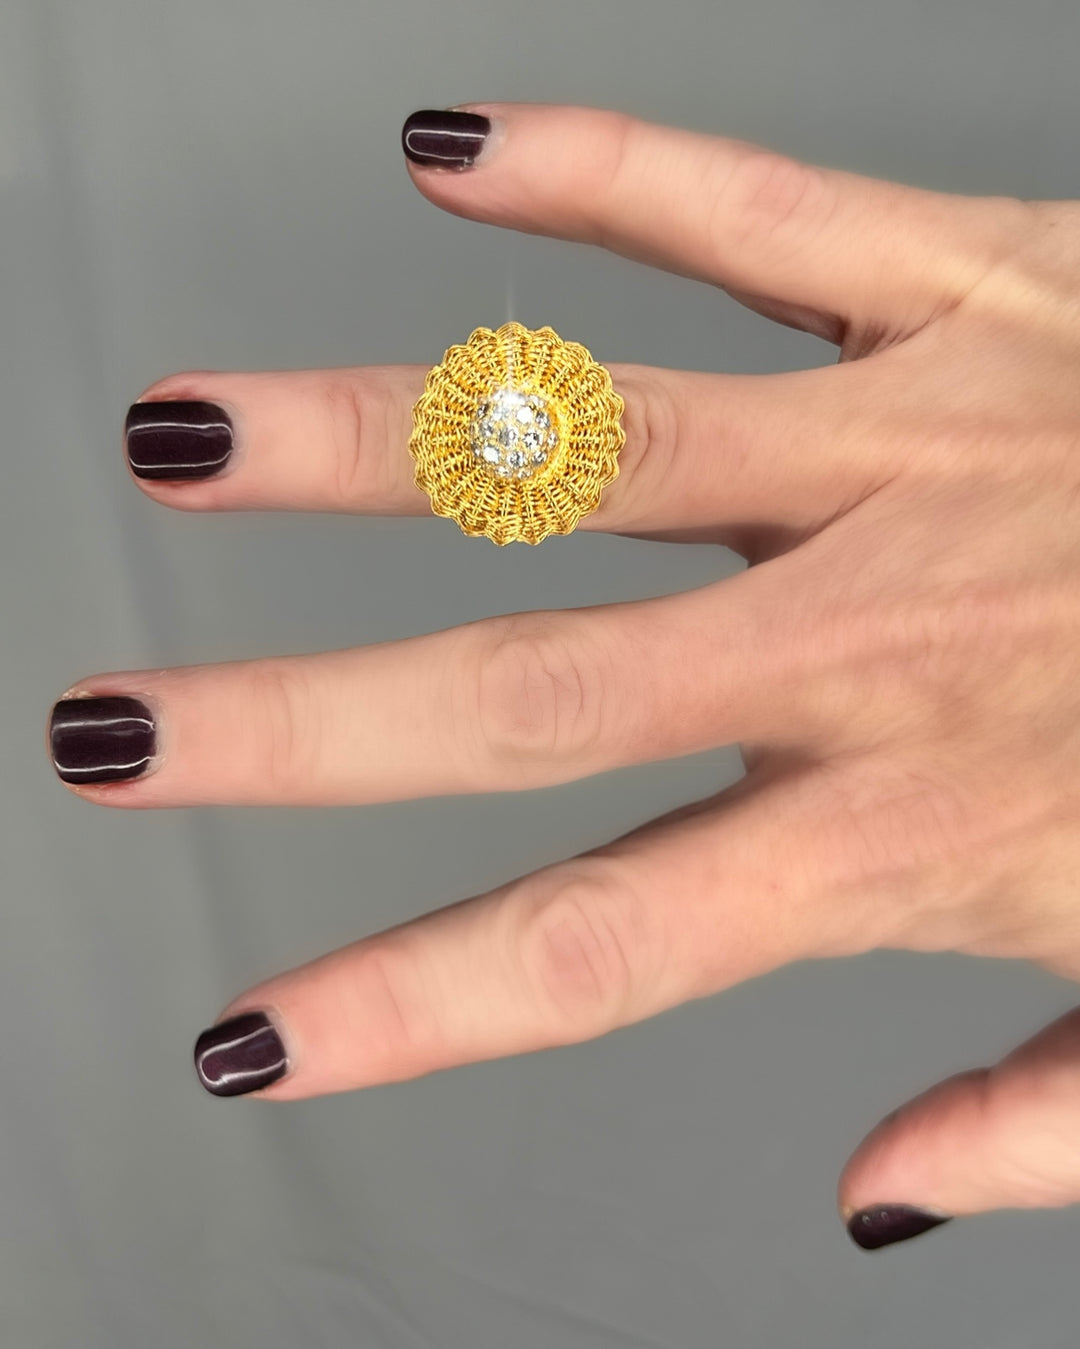 Vintage 18K Yellow Gold and Diamond Basketweave Ring